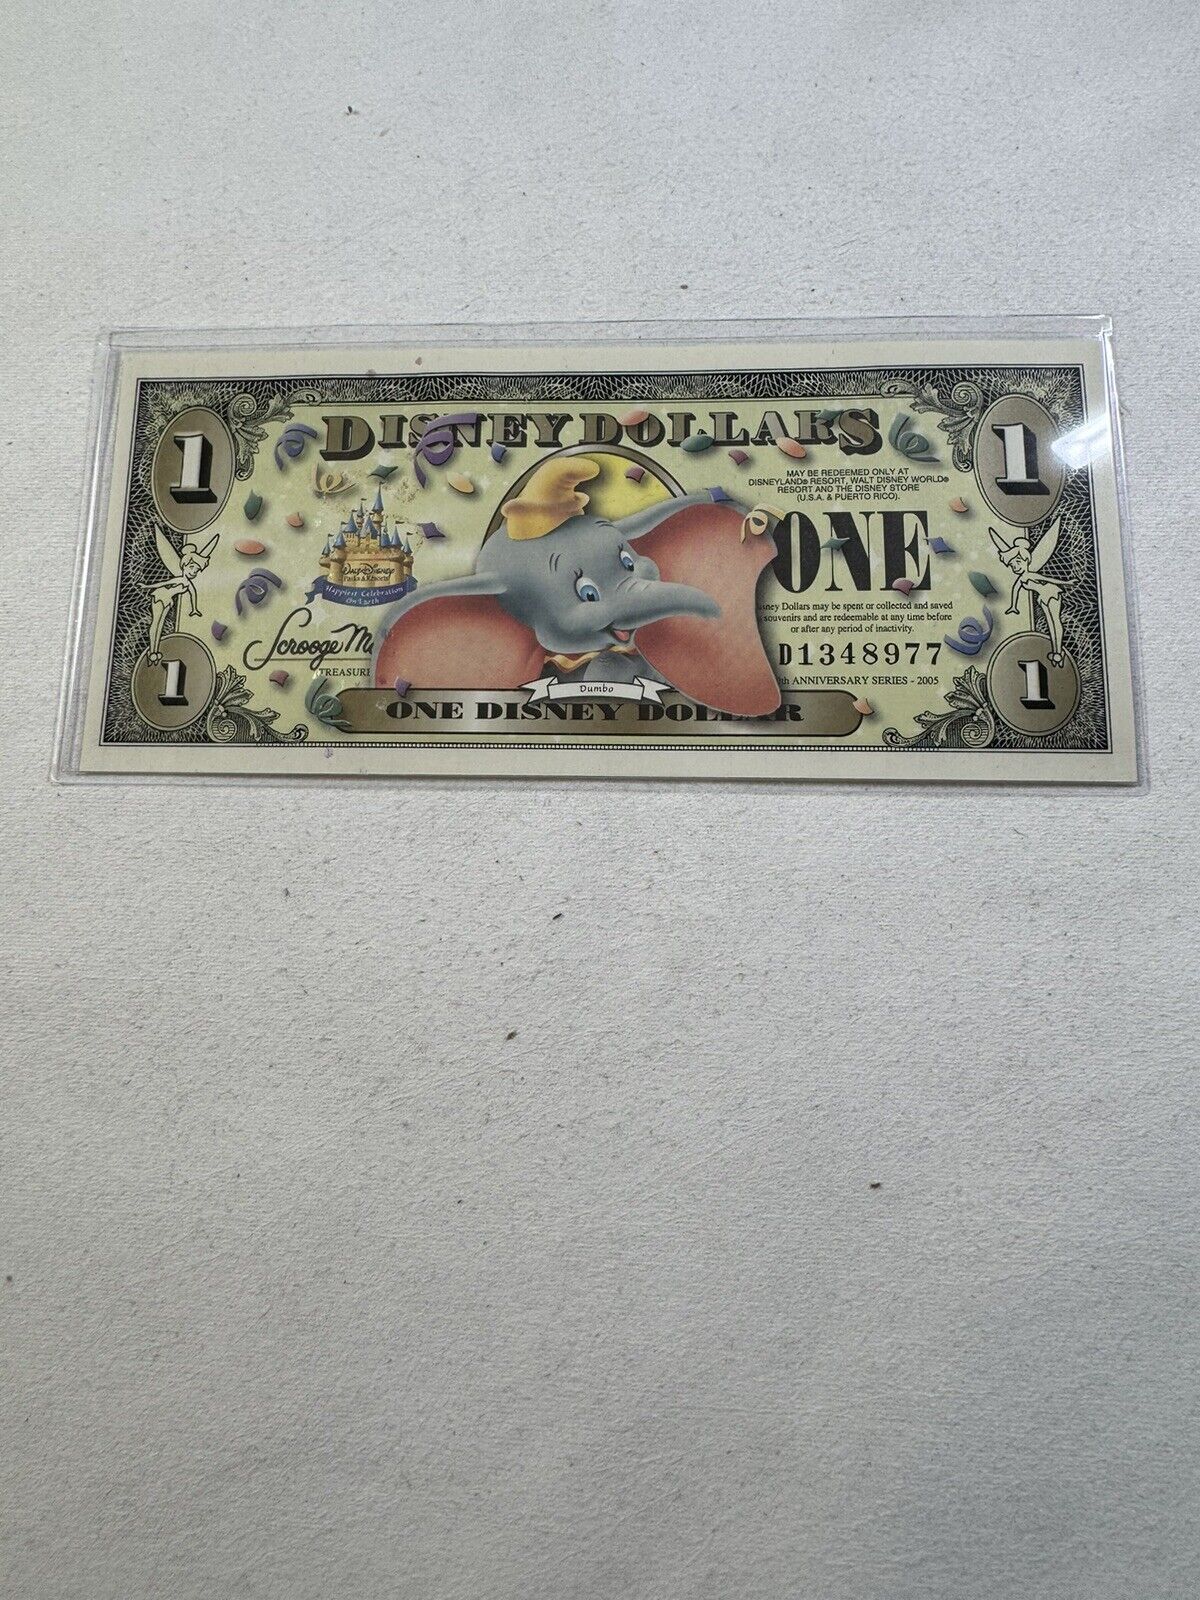 2005 Disney Dollar Dumbo with Barcode from Disney World